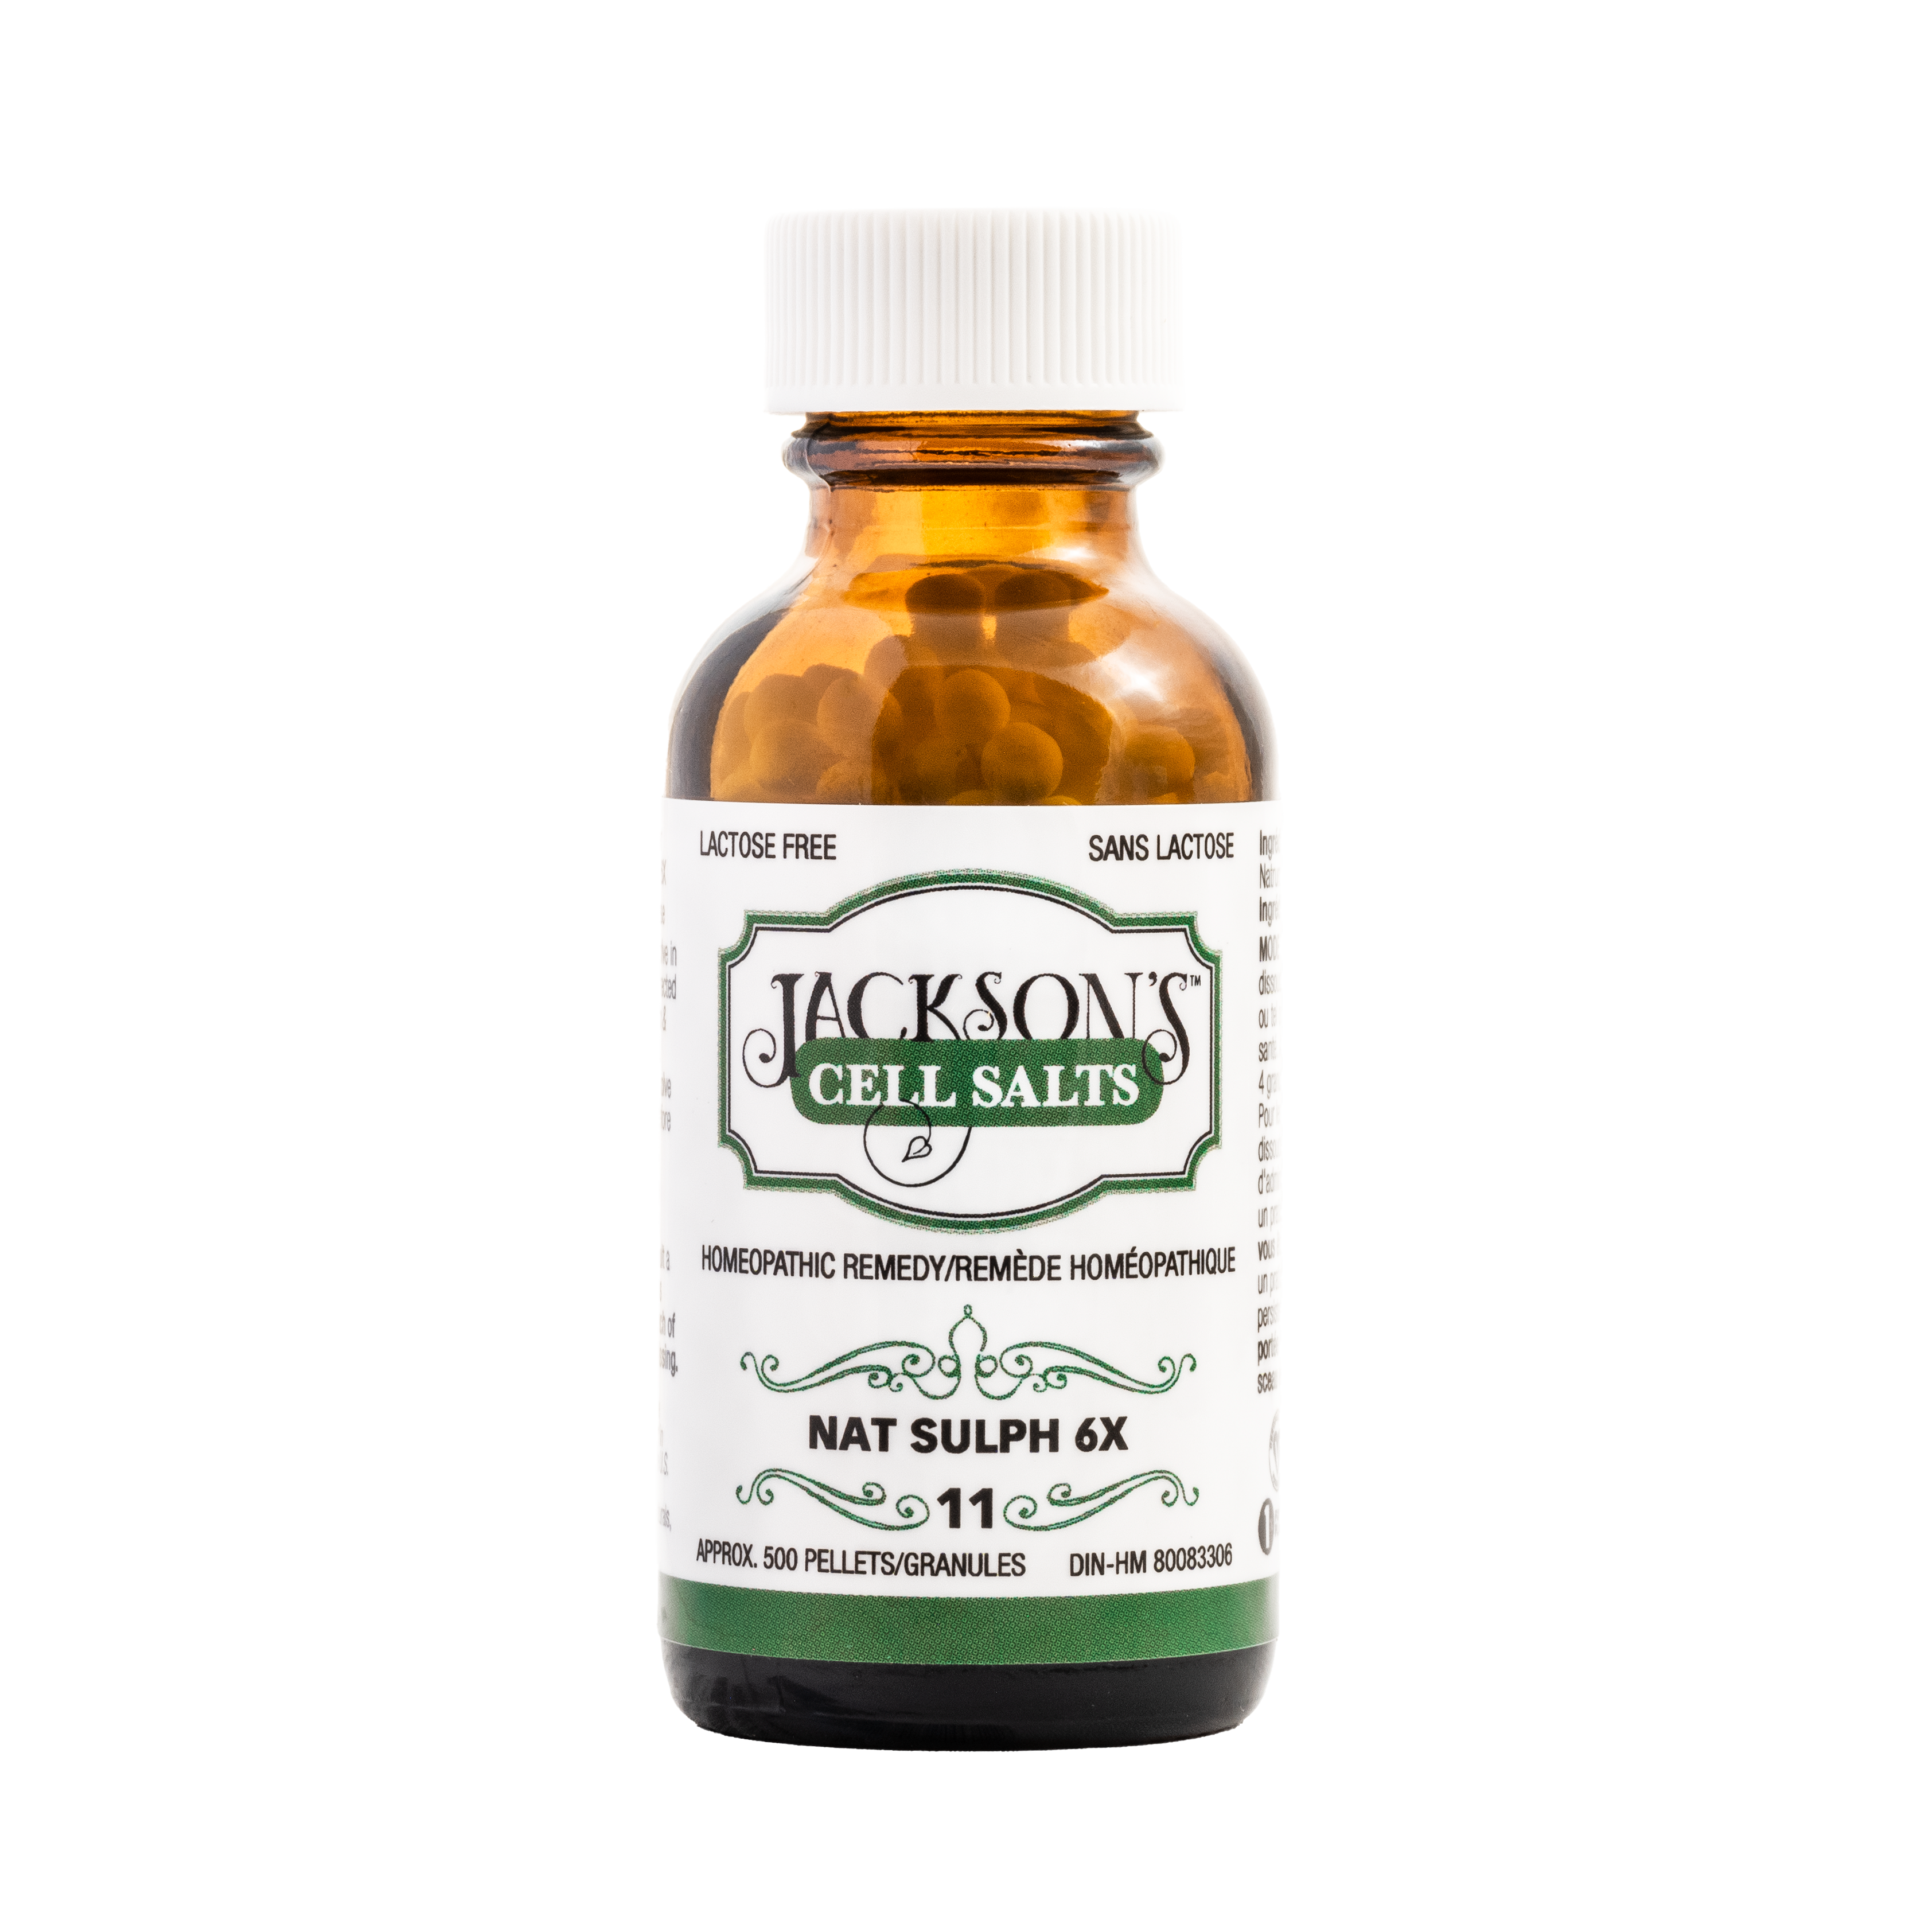 Cell Salt Kit for Optimal Digestion - Certified Vegan, Lactose Free Cell Salt #9, #10, #11